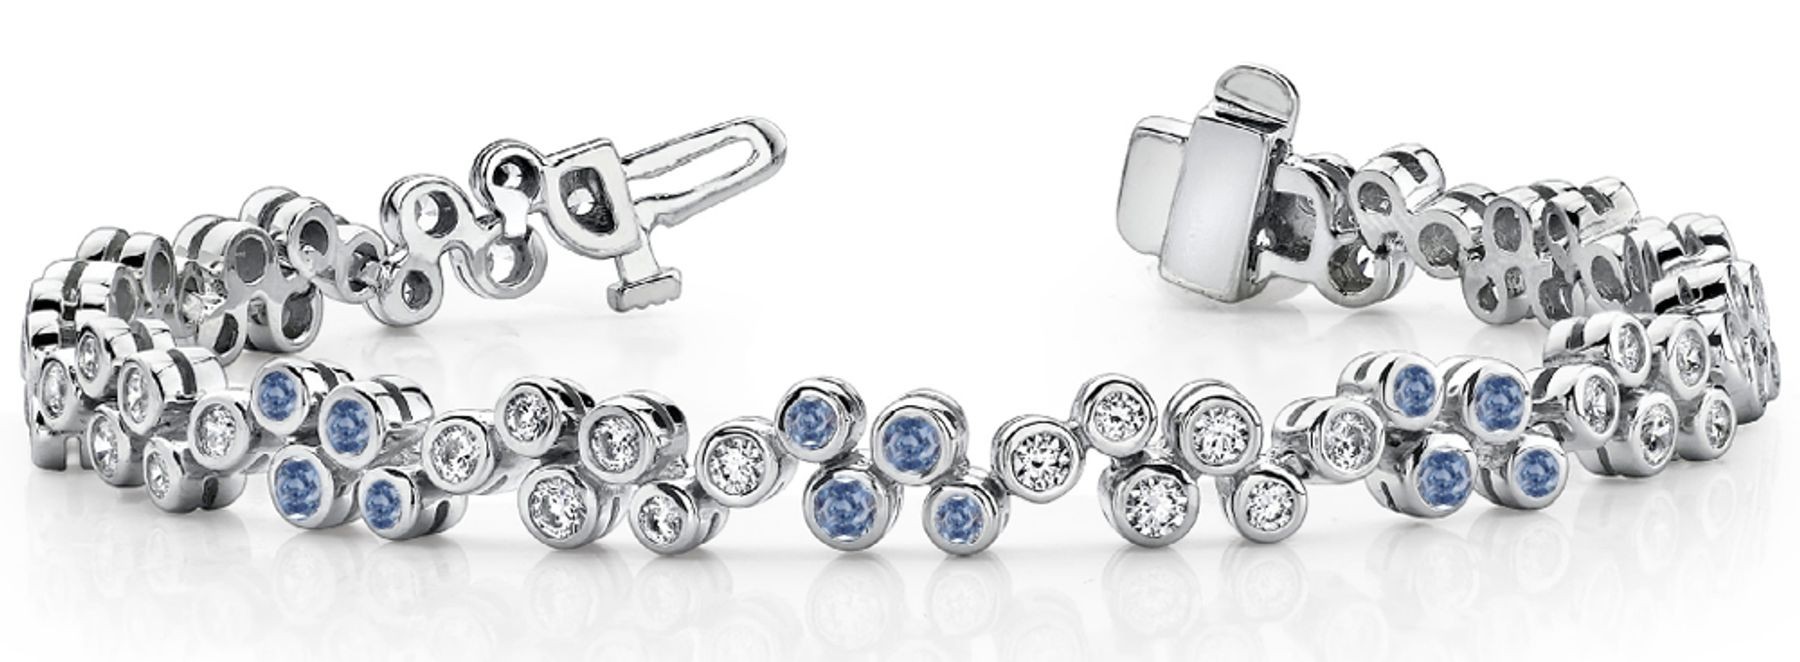 Colored Diamond Bracelets: Blue Diamonds - Blue Colored Diamond Bracelet